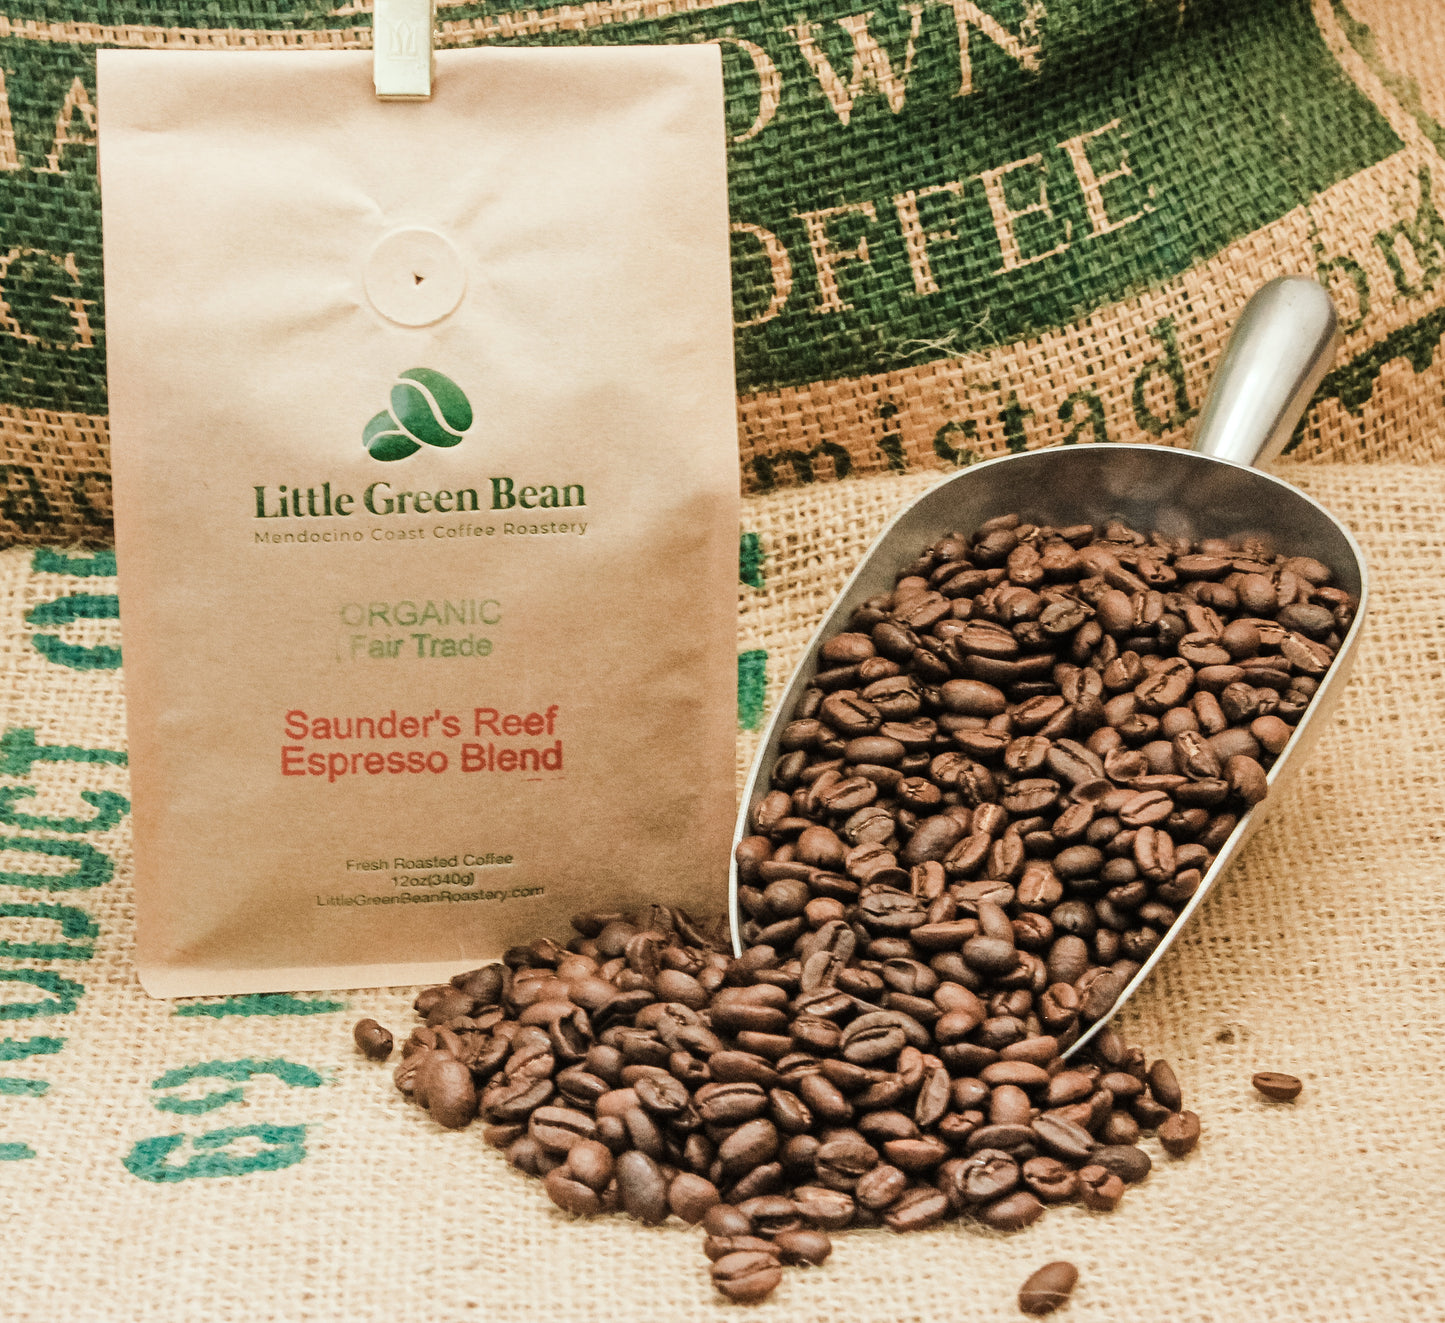 Saunder’s Reef Espresso Blend - Fair Trade Organic - 12 oz